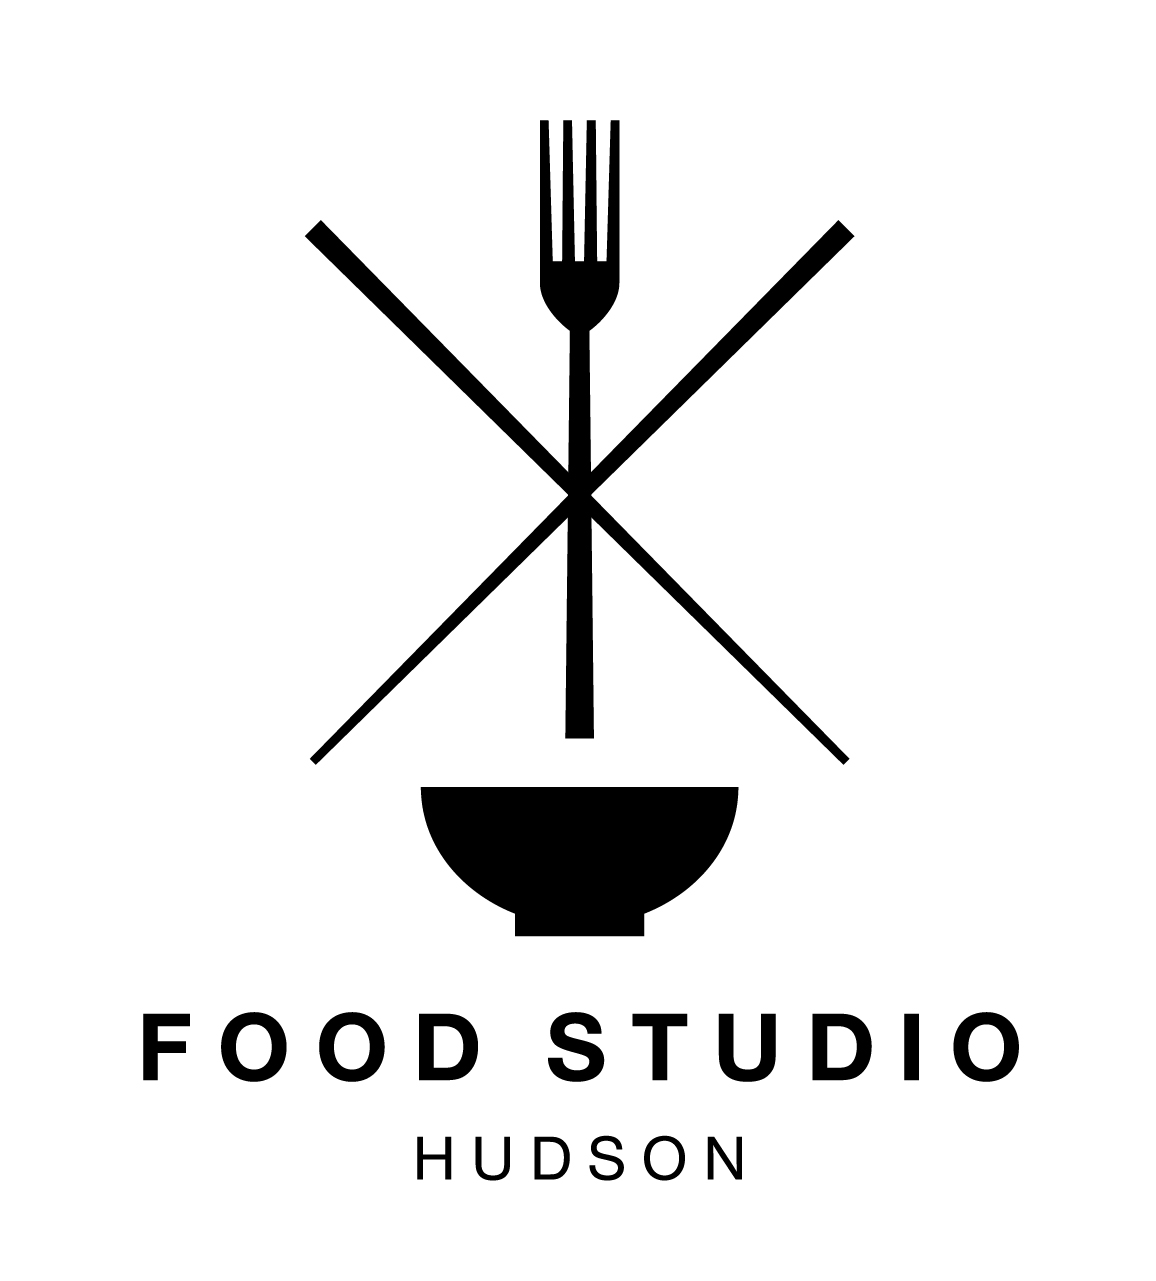 Hudson Food Studio